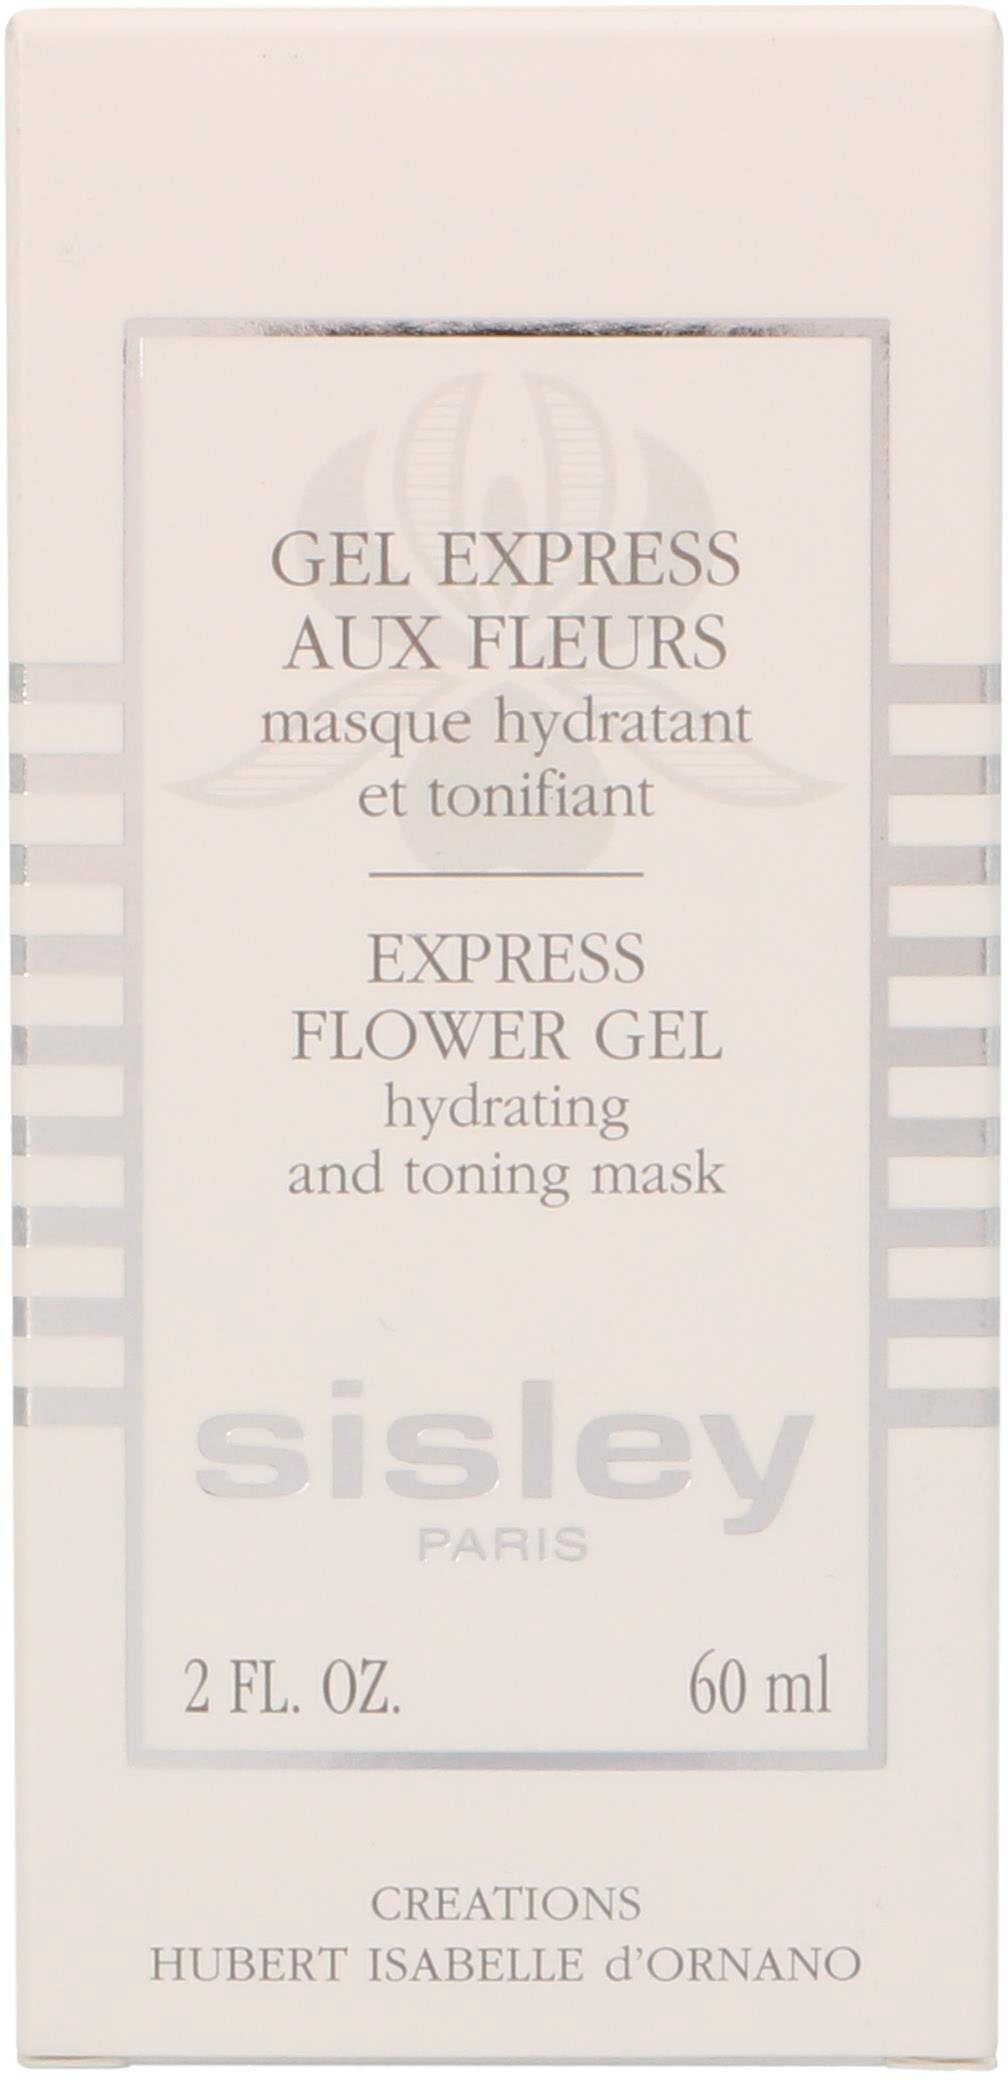 Express sisley Flower Gel Gesichtsgel